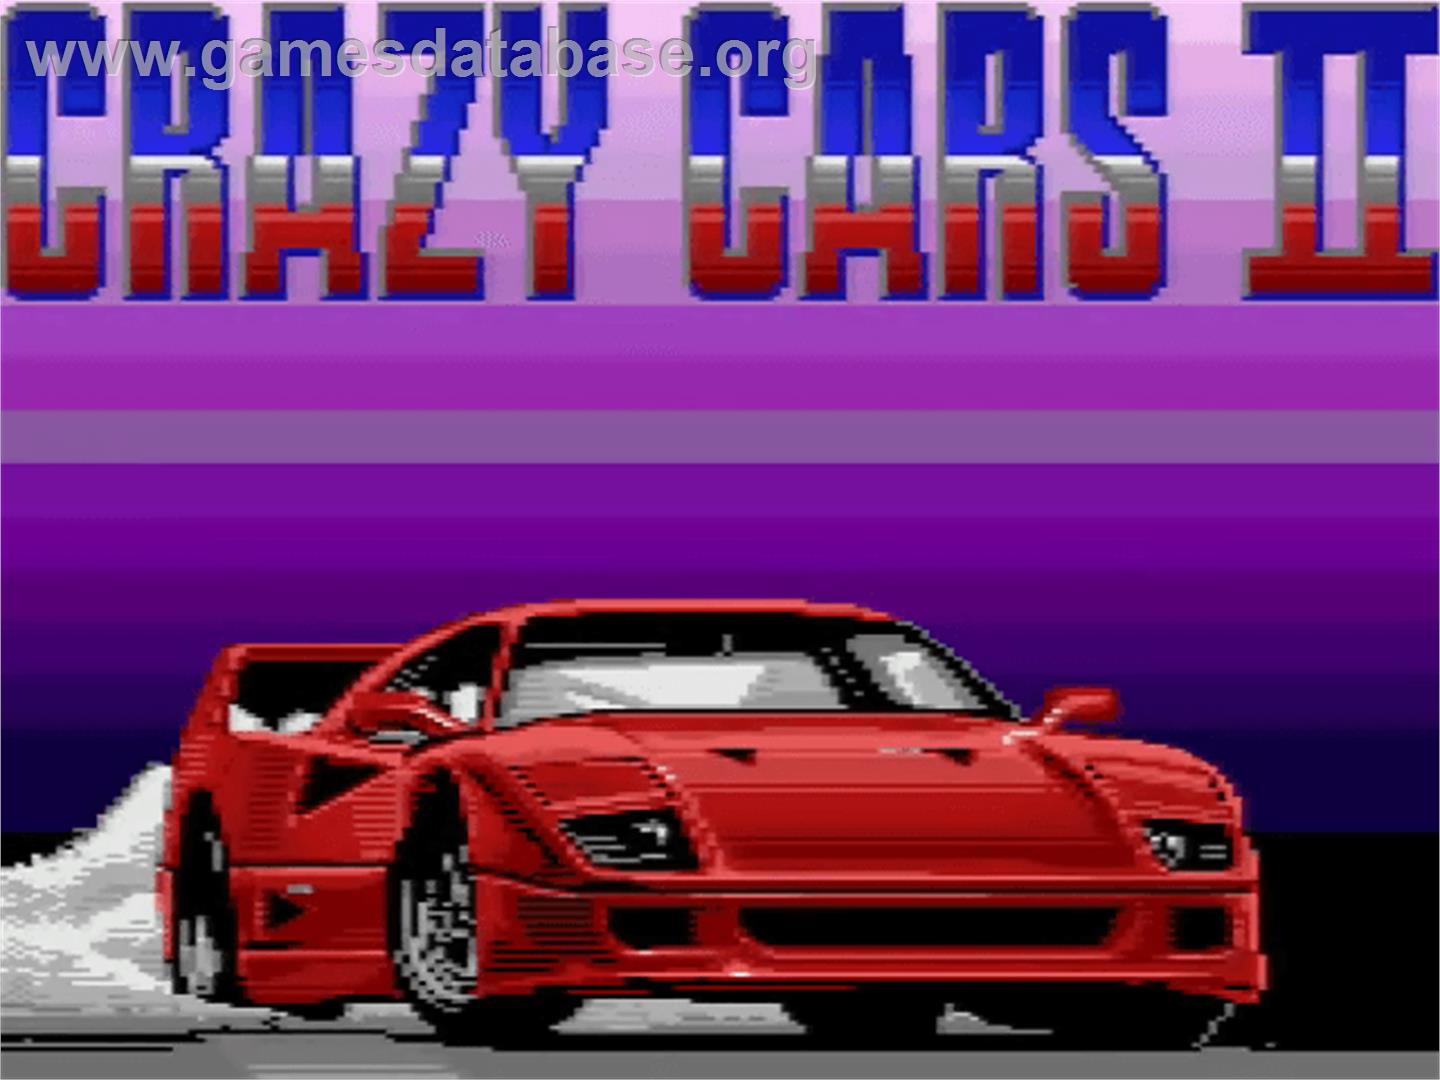 Crazy Cars II - Amstrad GX4000 - Artwork - Title Screen